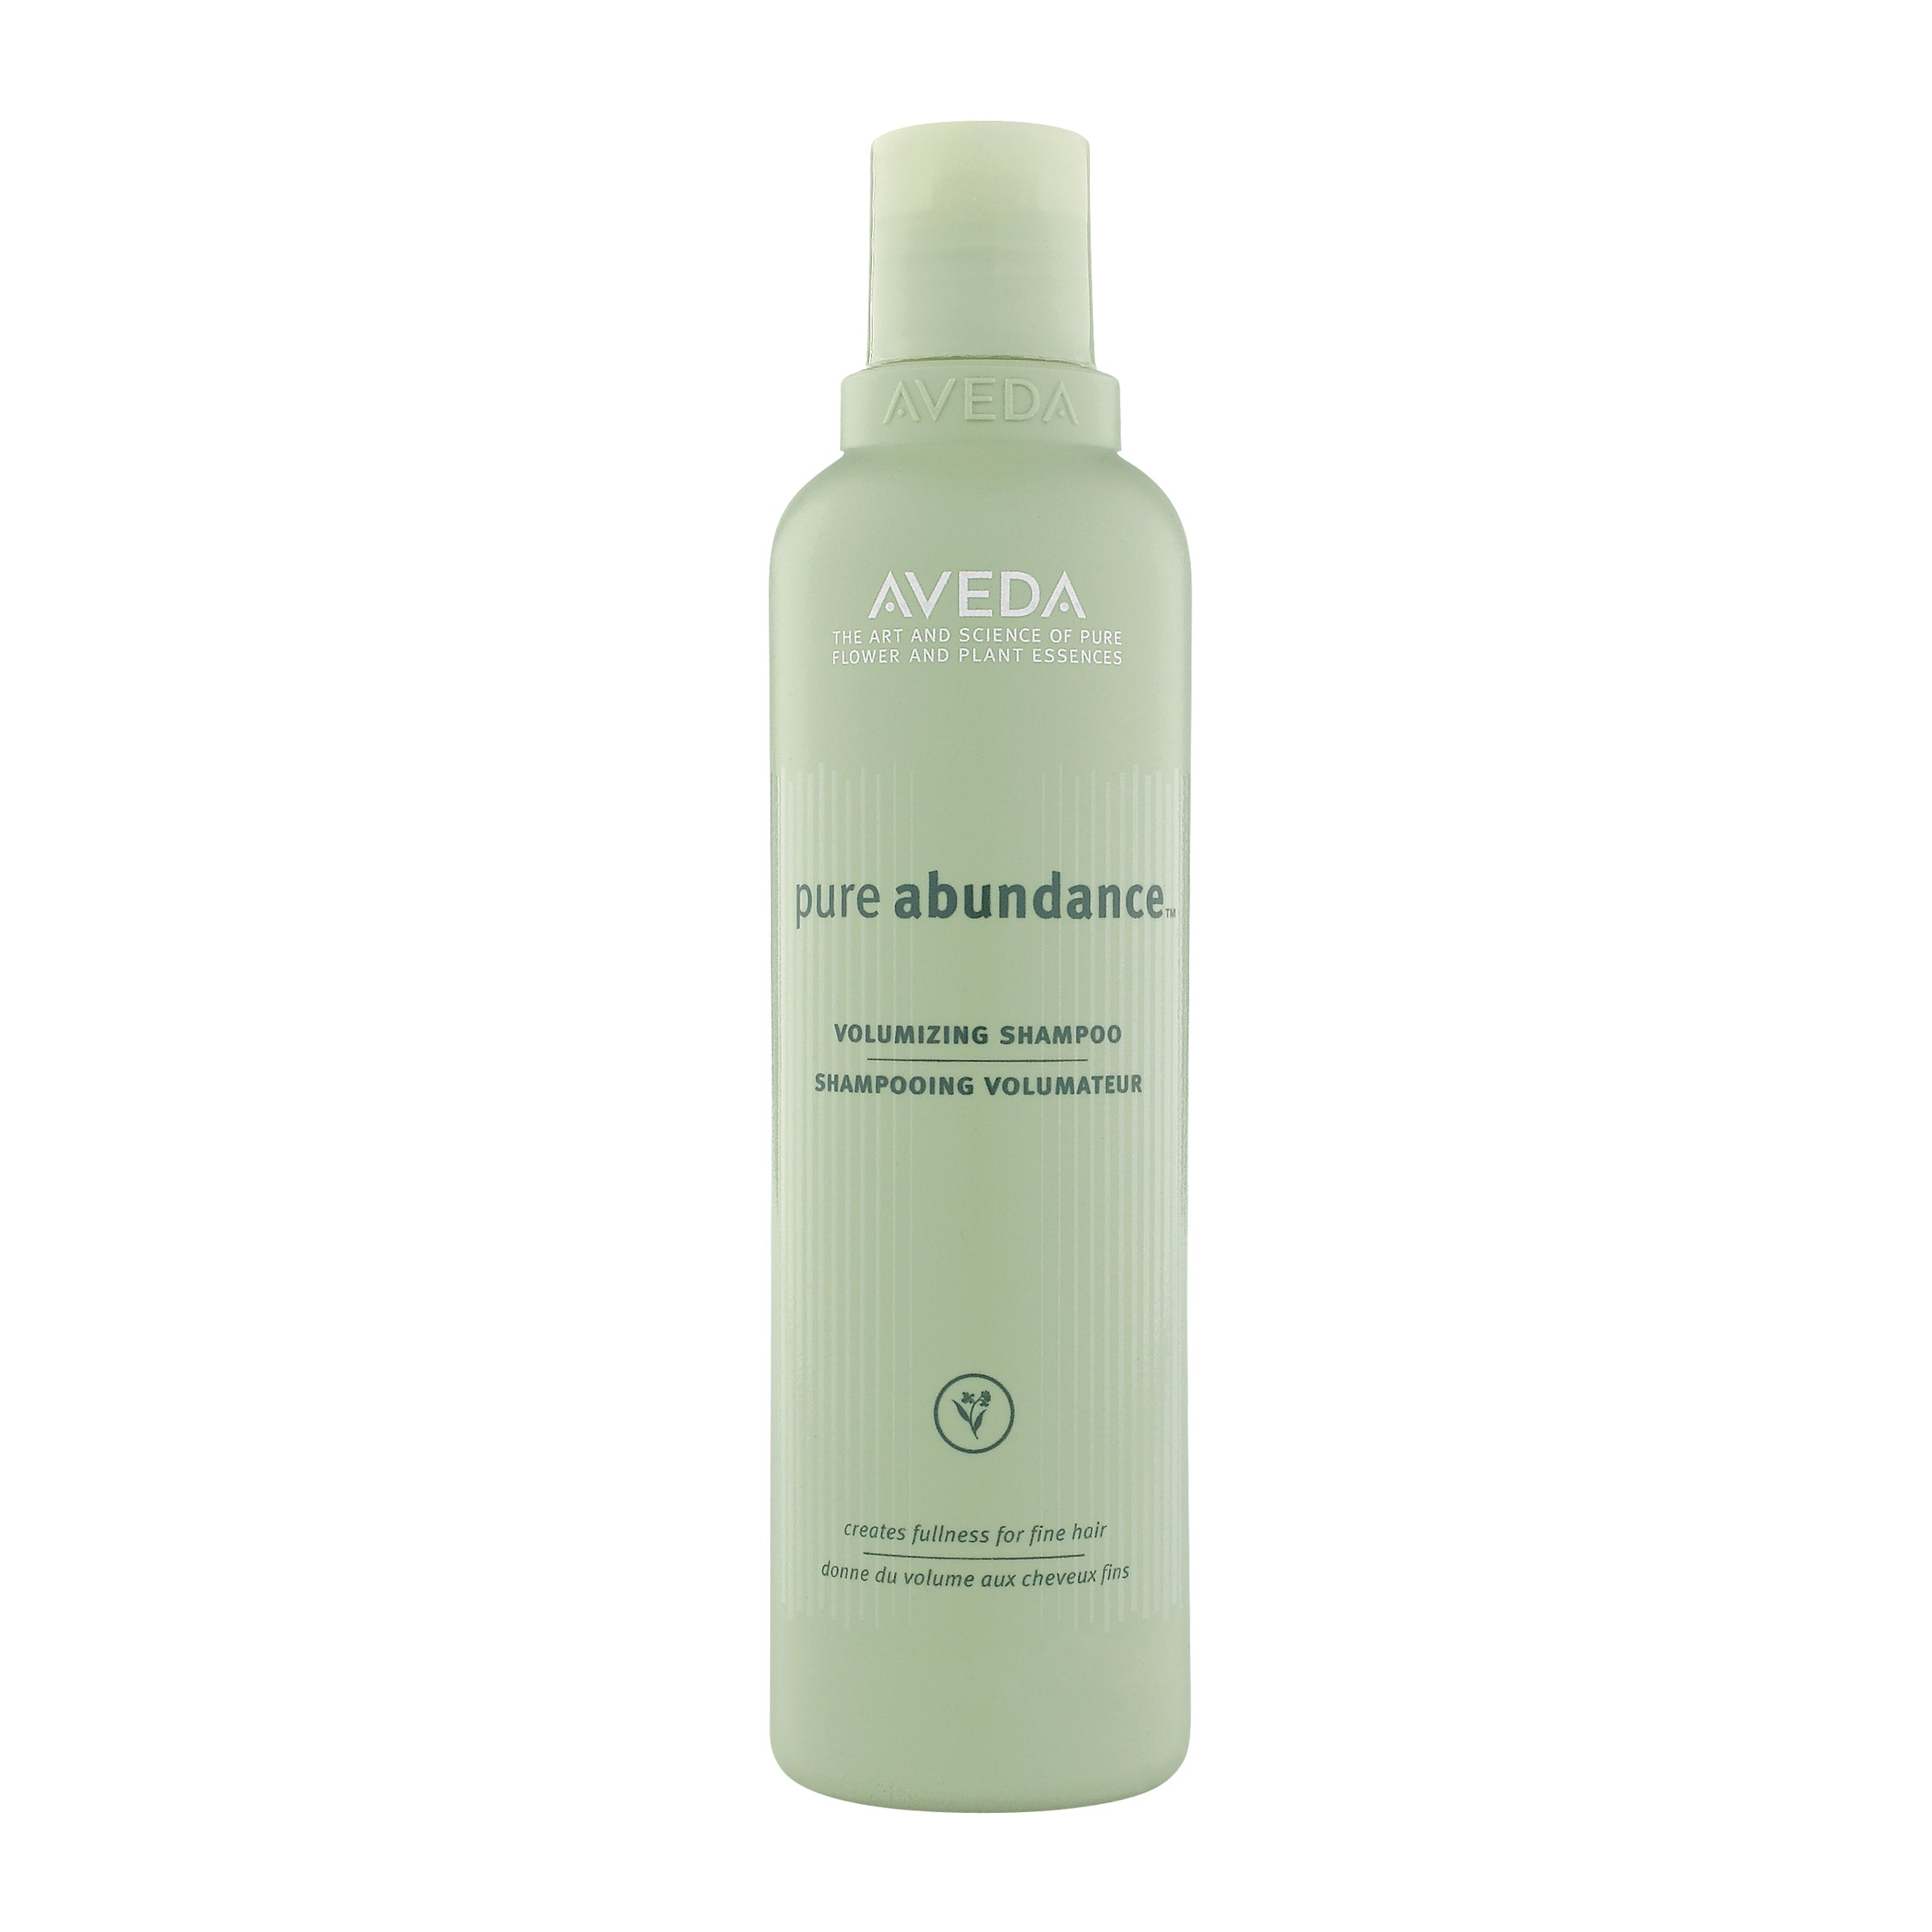 Aevda pure abundance™ volumizing shampoo 250ml